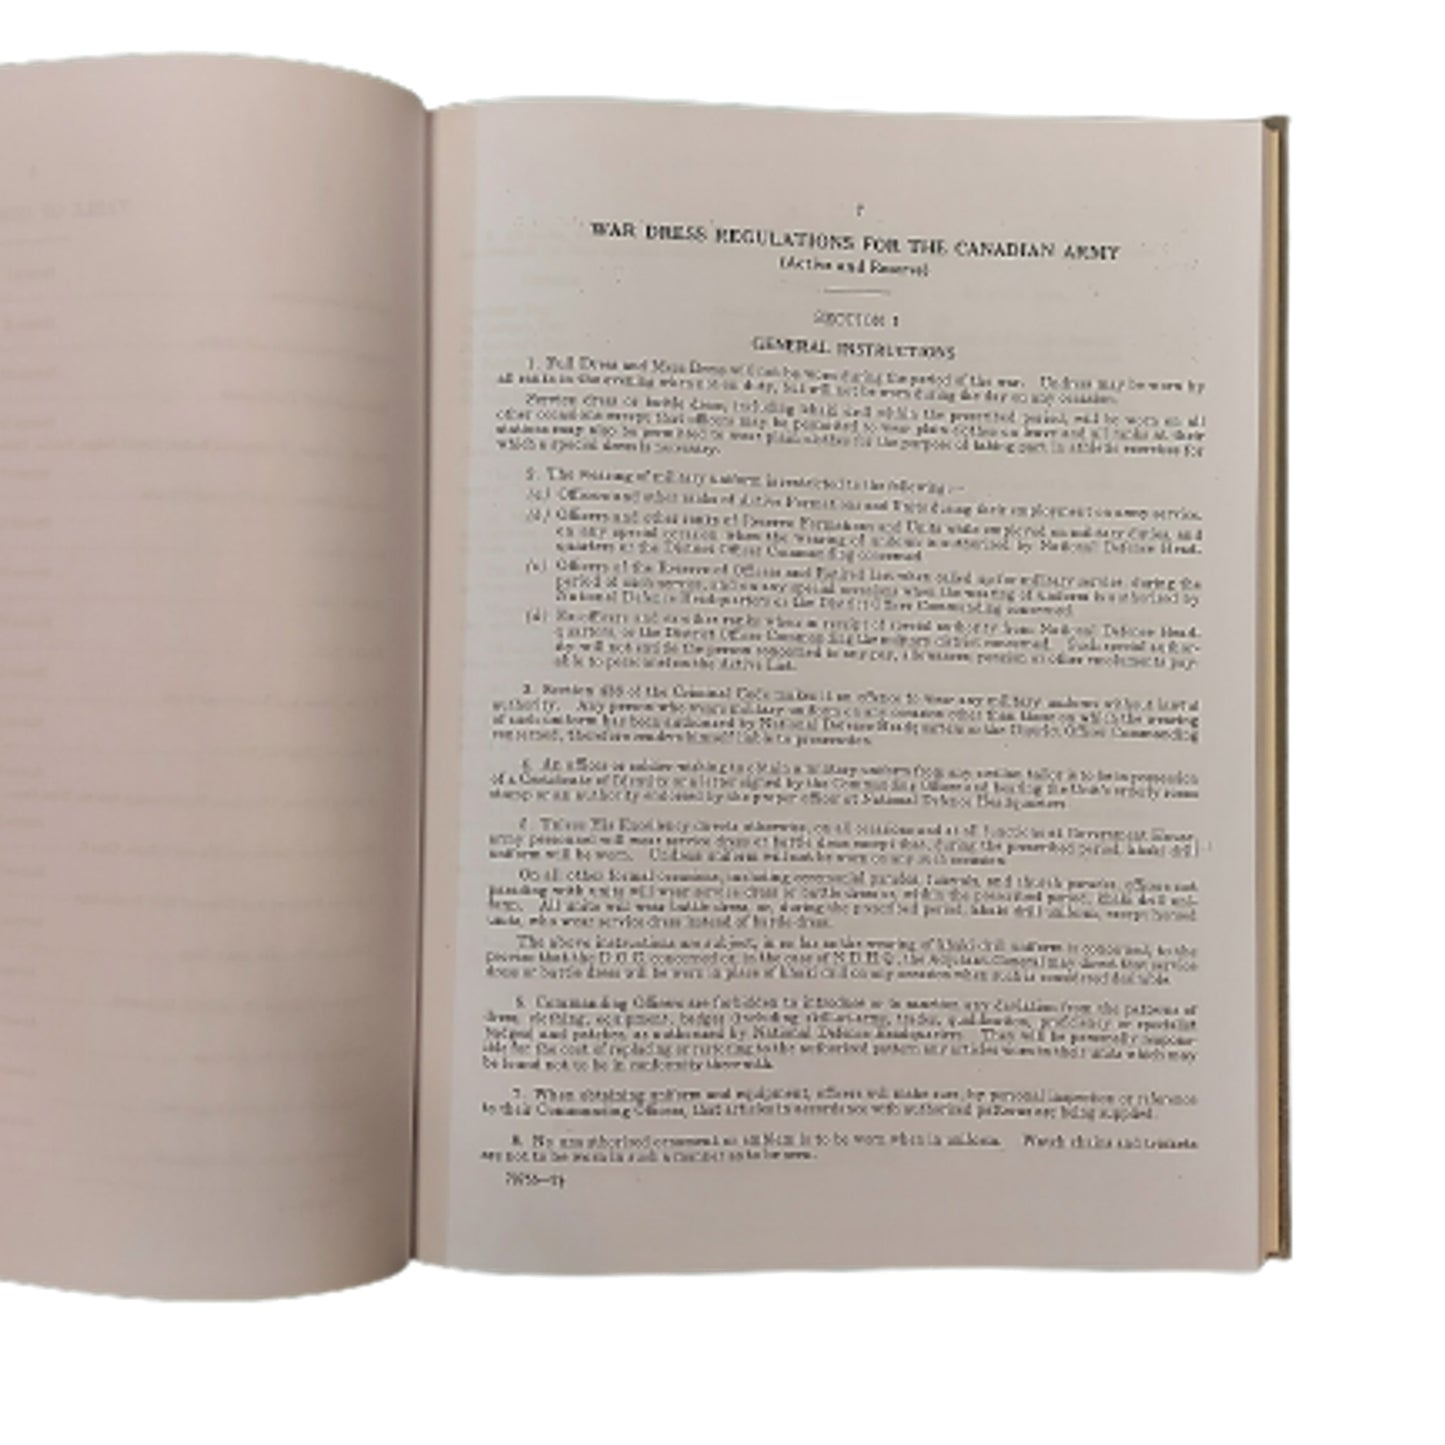 1943 Dress Regulations Service Publications - Reprint of Original